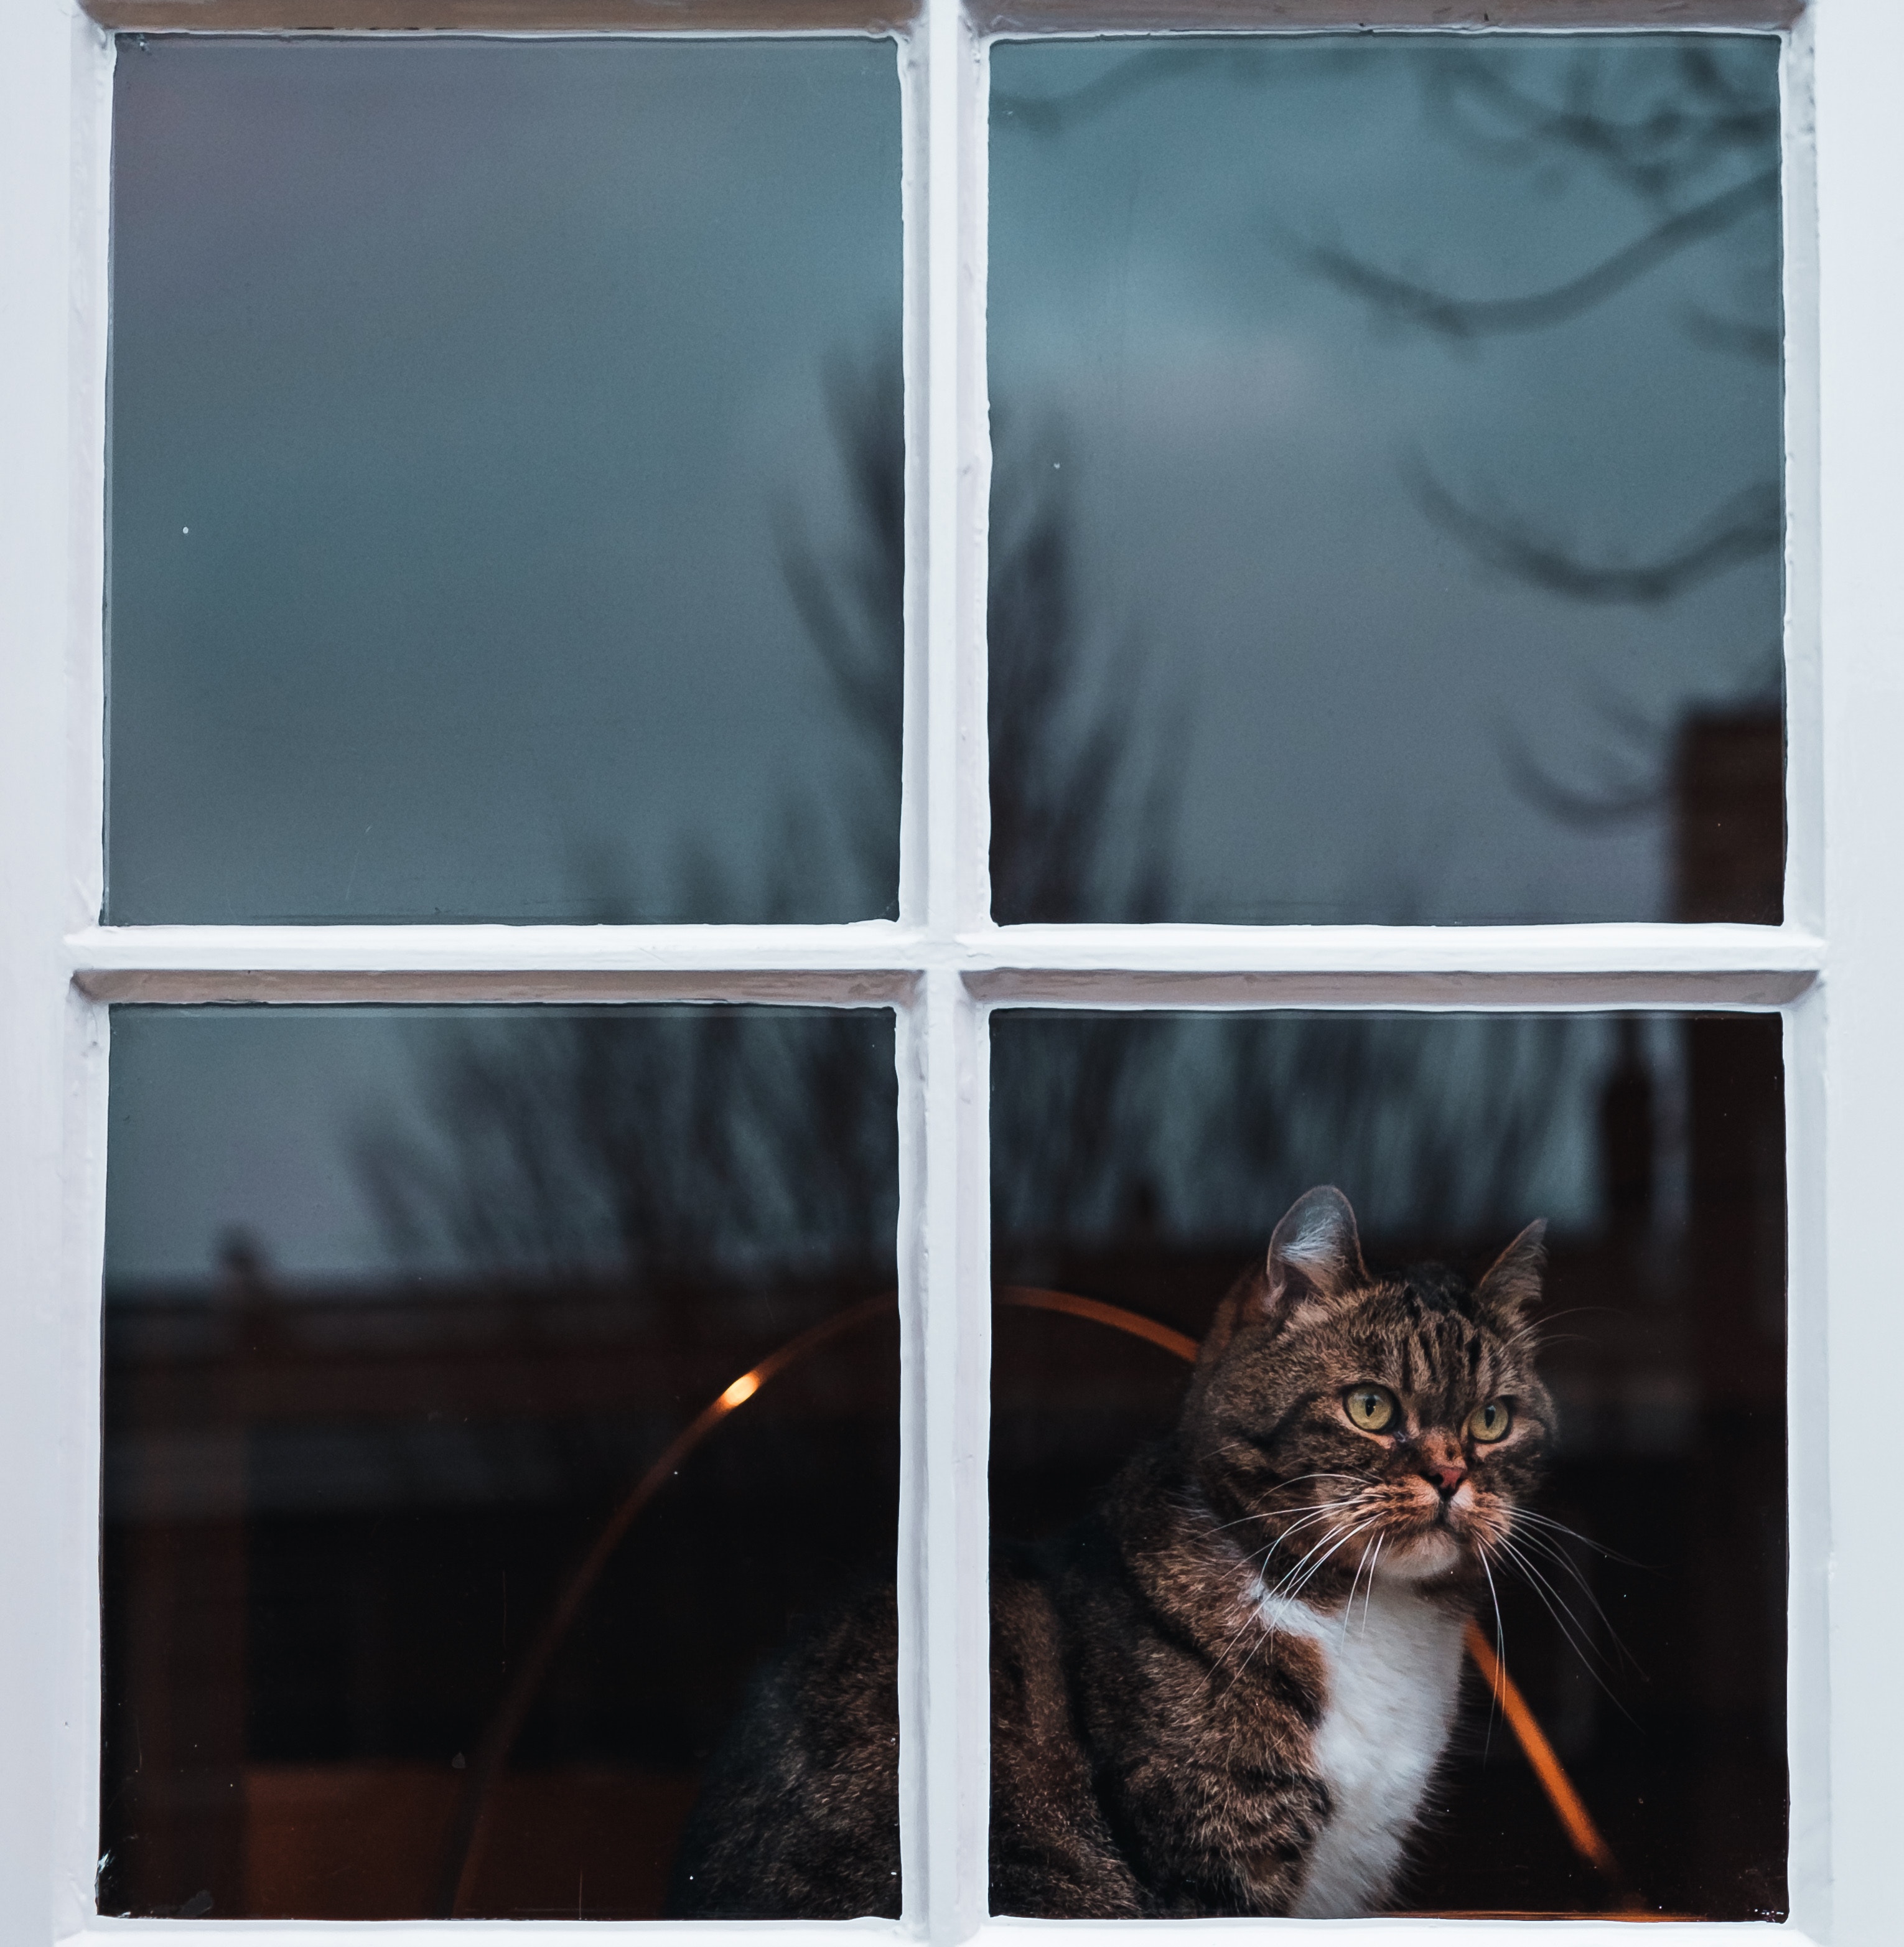 126495 descargar imagen animales, gato, ventana, mirar, expectativa, espera: fondos de pantalla y protectores de pantalla gratis